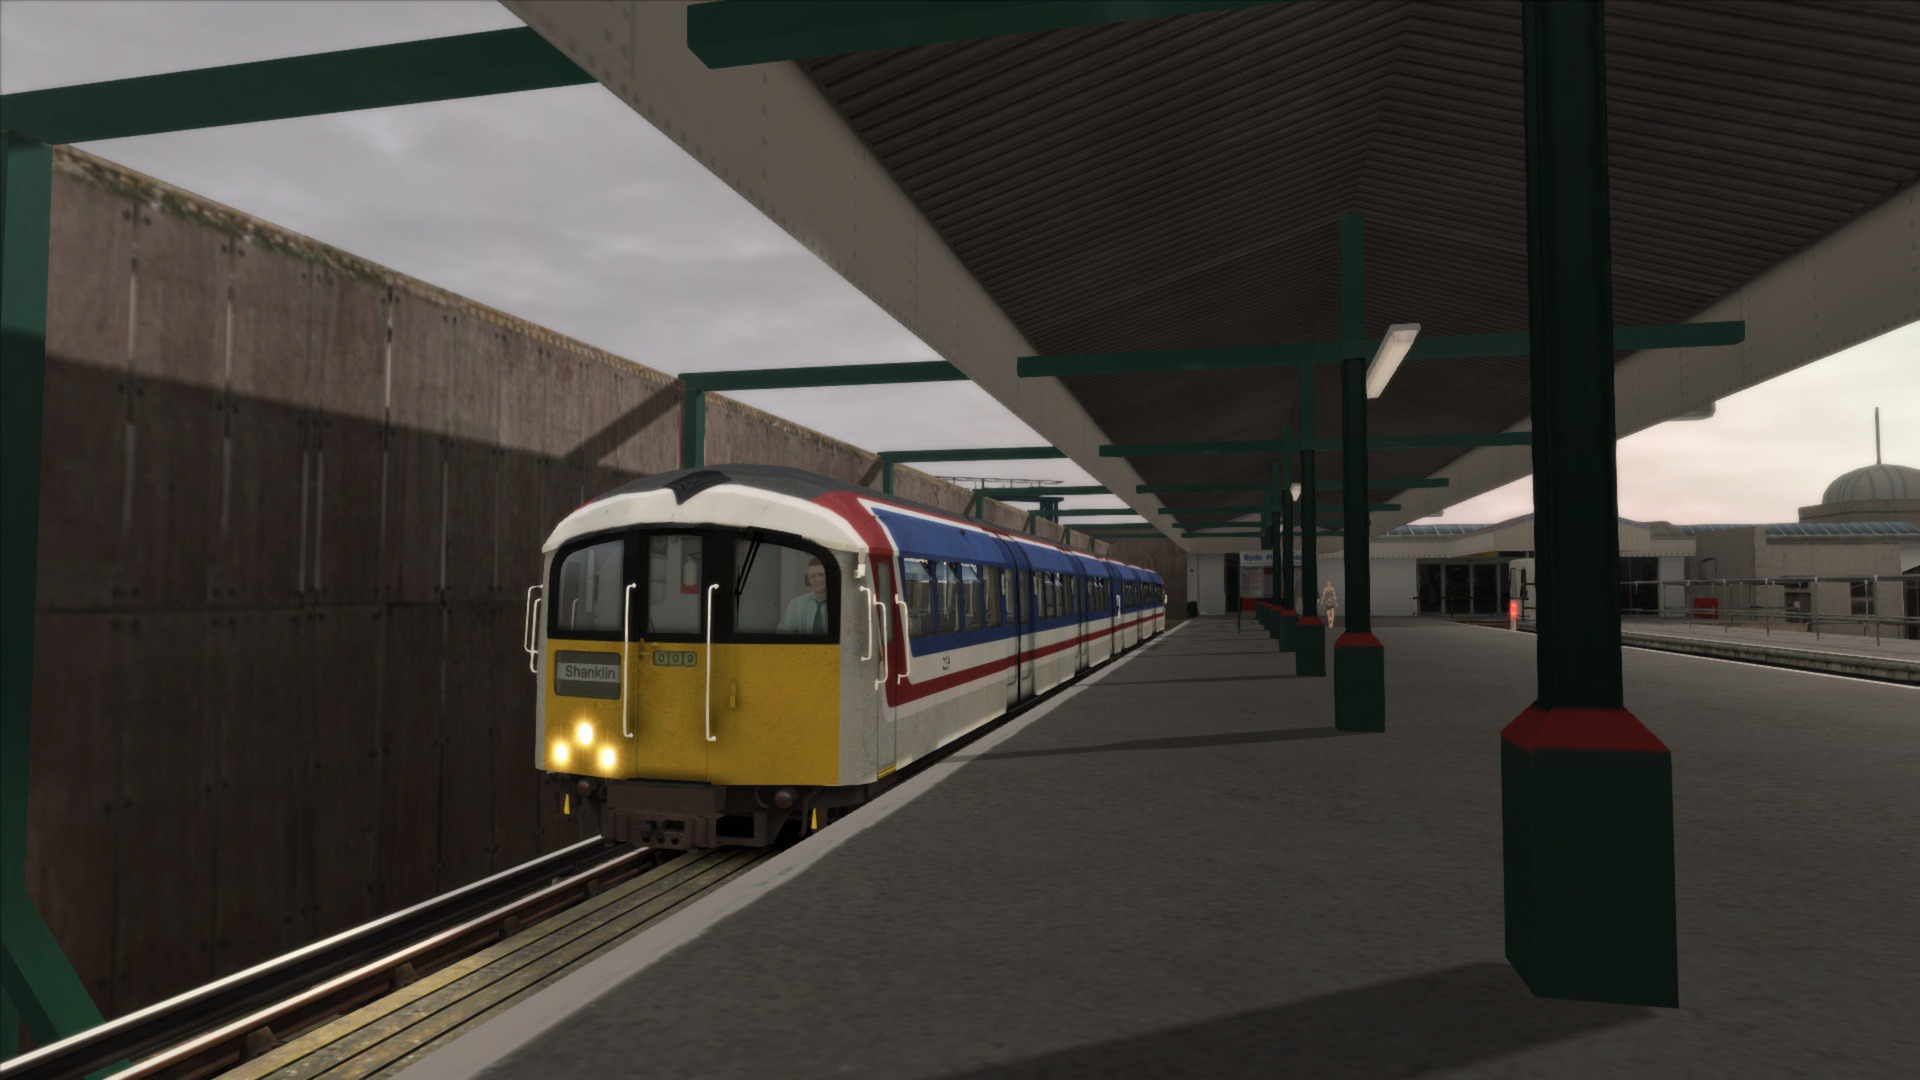 [$ 0.17] Train Simulator - Isle of Wight Route Add-On DLC Steam CD Key